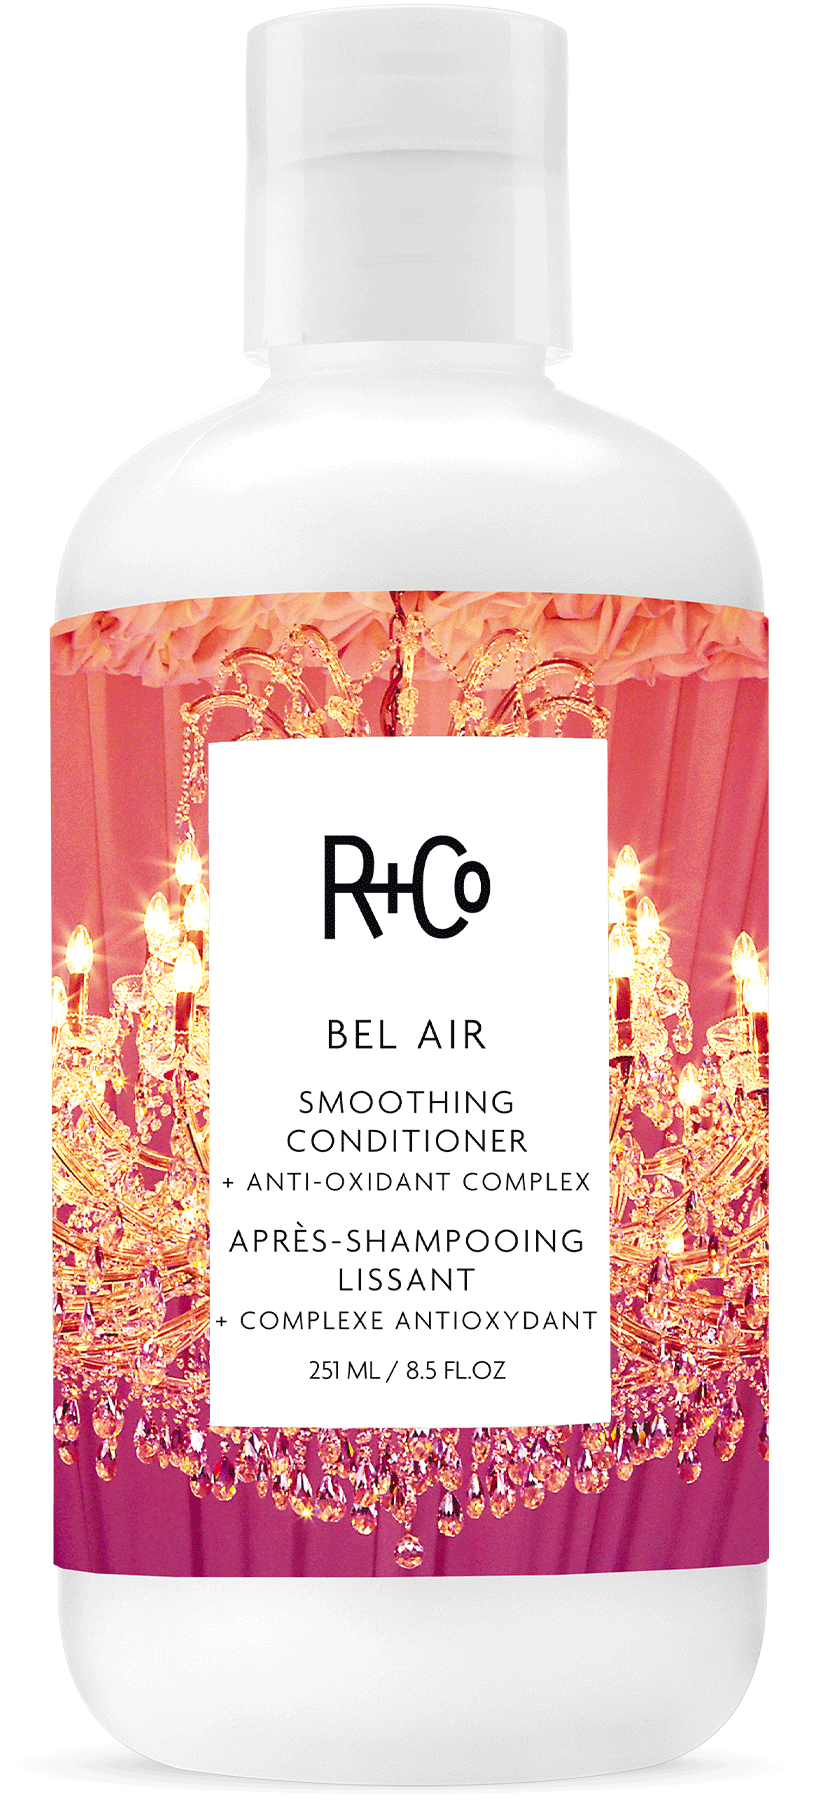 R+CO - Bel Air - Revitalisant Lissant + Complexe Anti-Oxydant |33.8 oz|